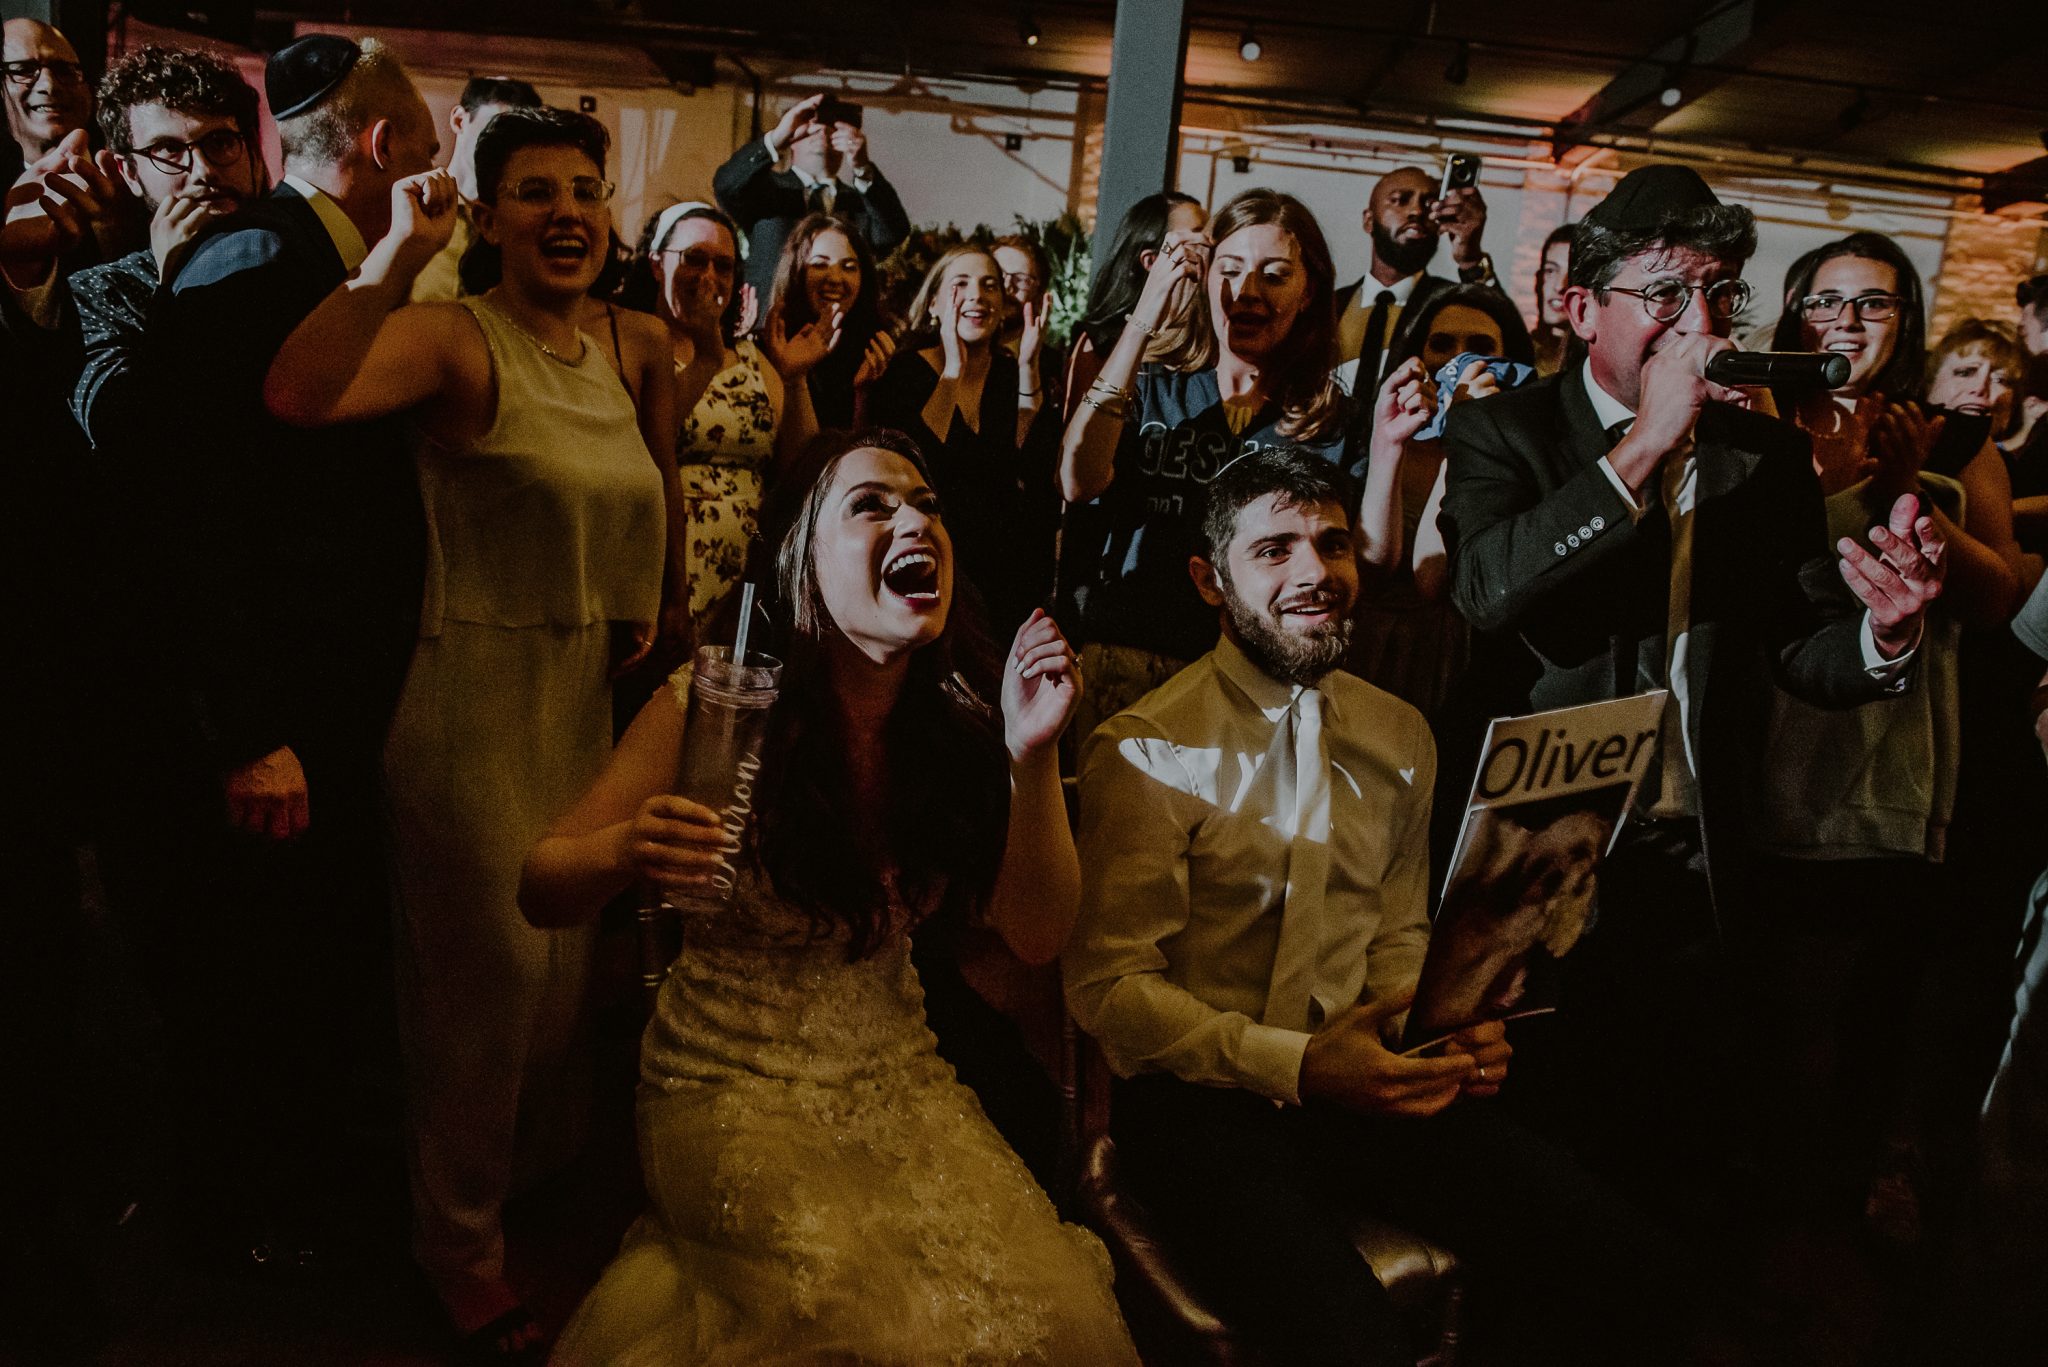 Brooklyn Jewish wedding photos